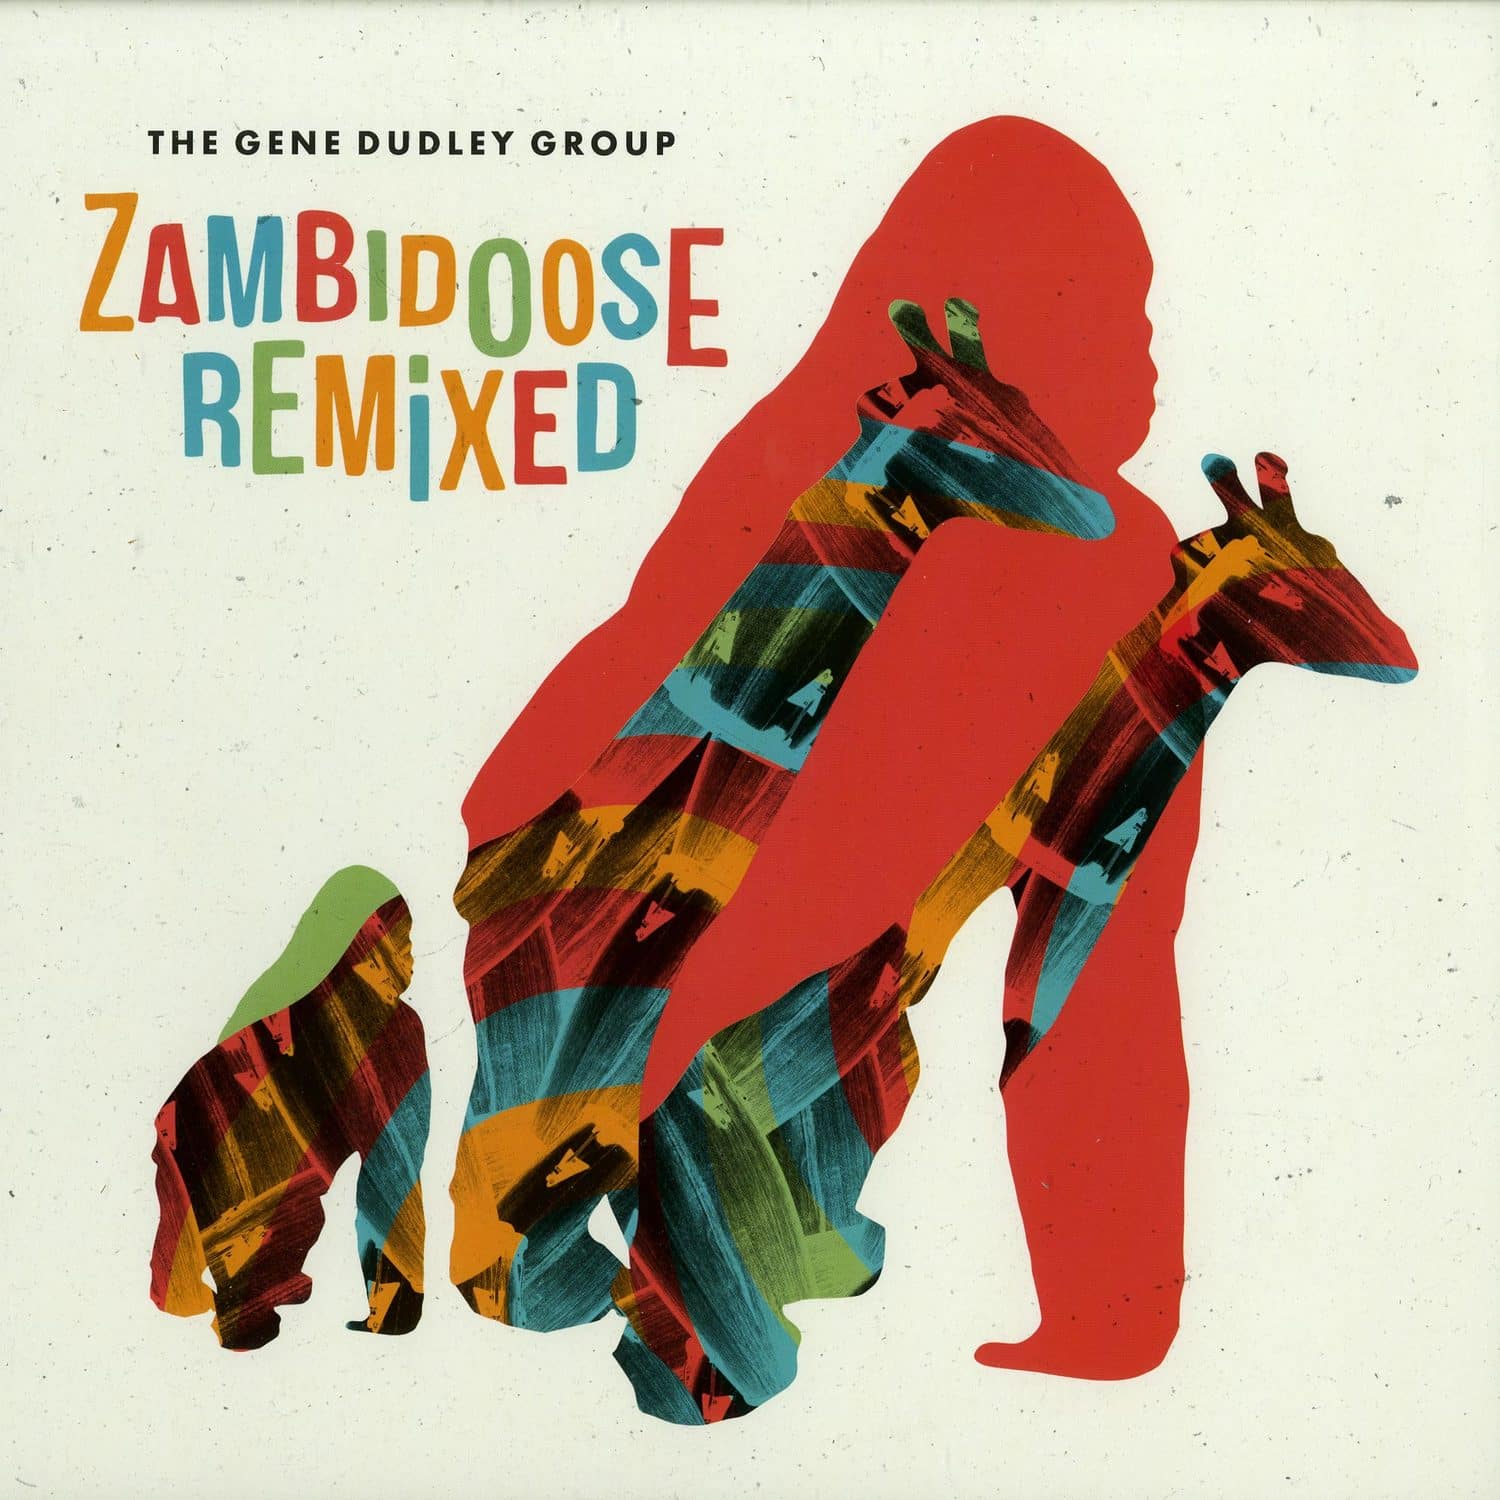 The Gene Dudley Group - ZAMBIDOOSE REMIXED